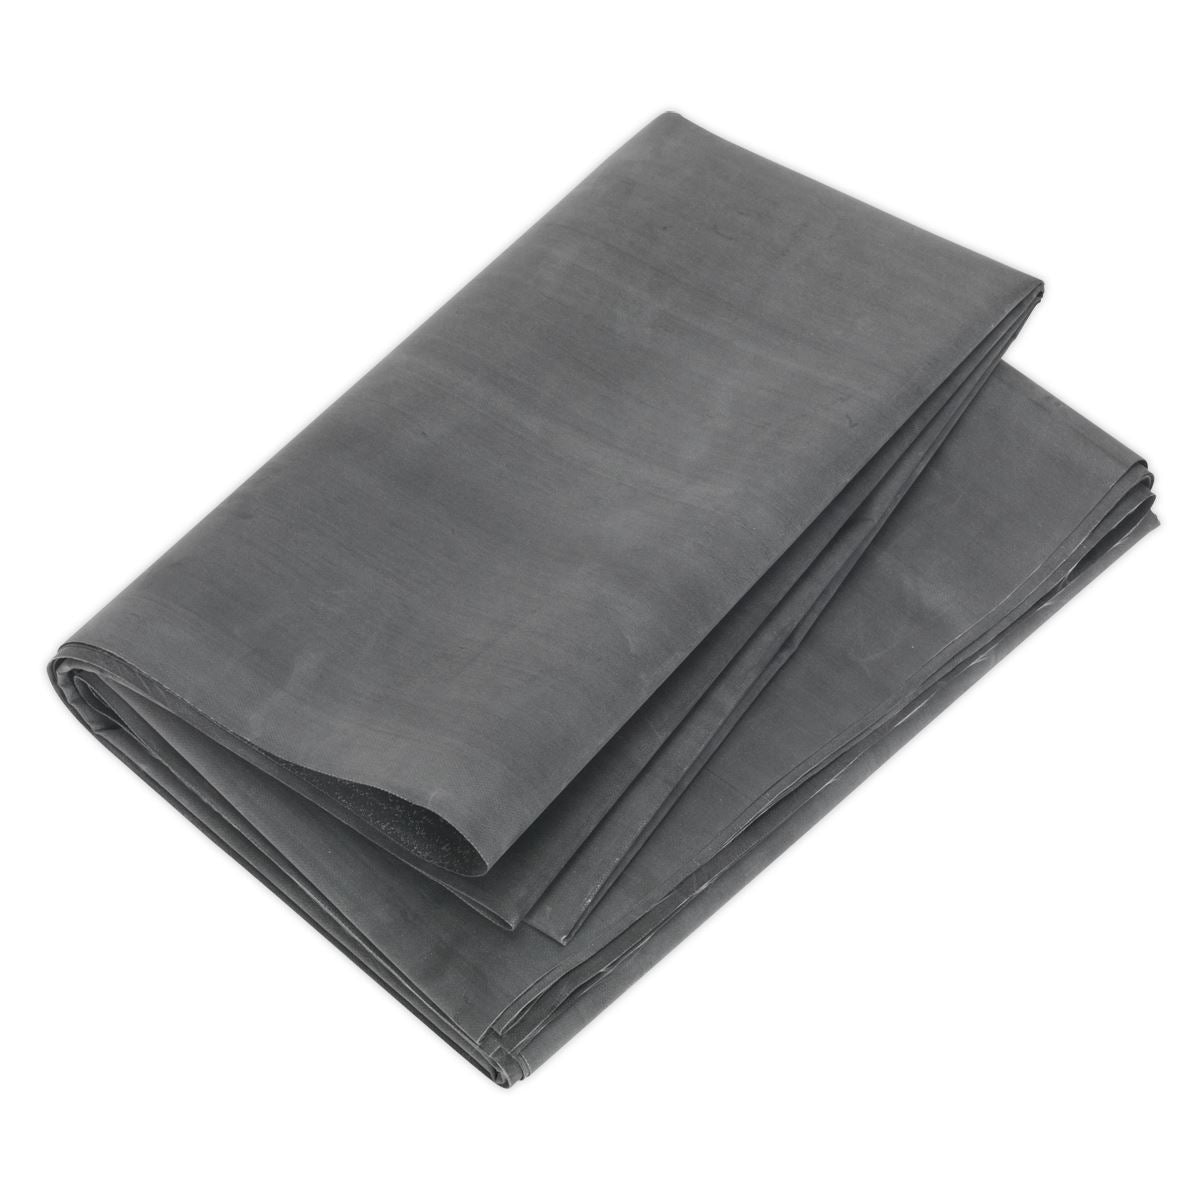 Sealey Spark-Proof Welding Blanket 1800mm x 1300mm